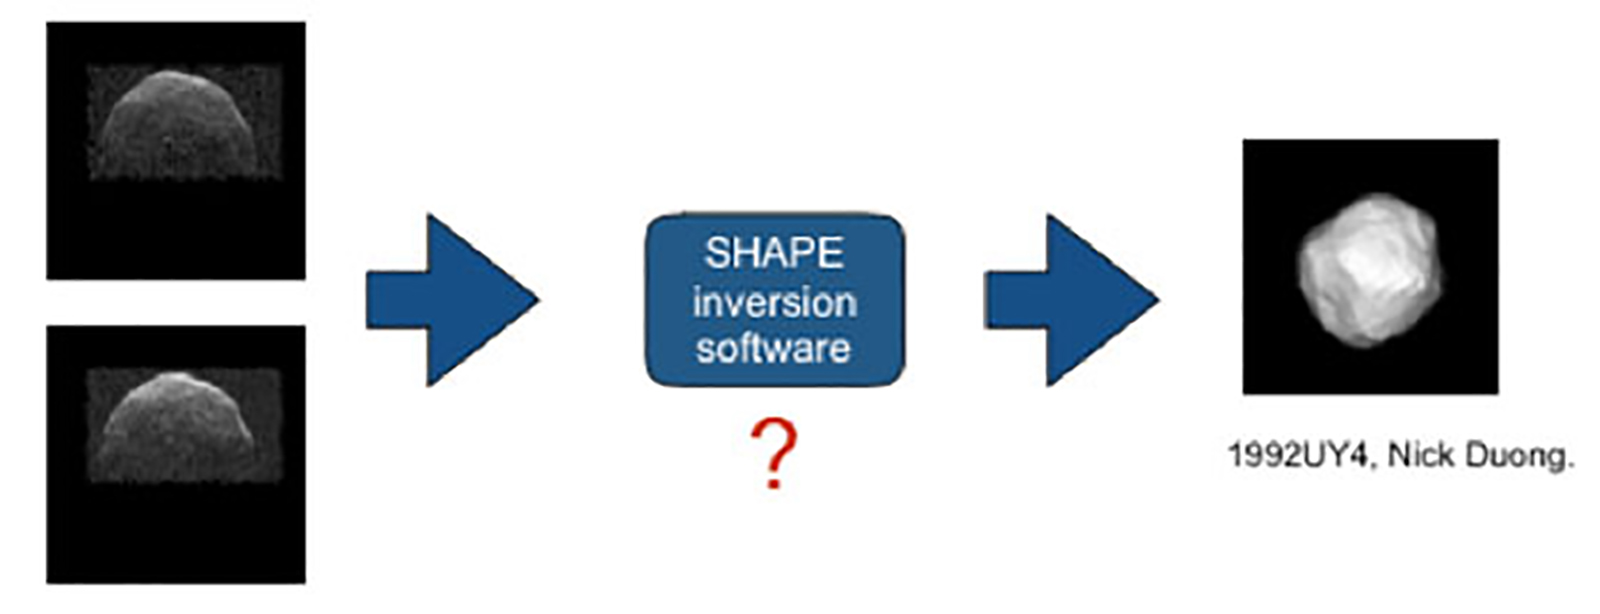 Shape inversion software program